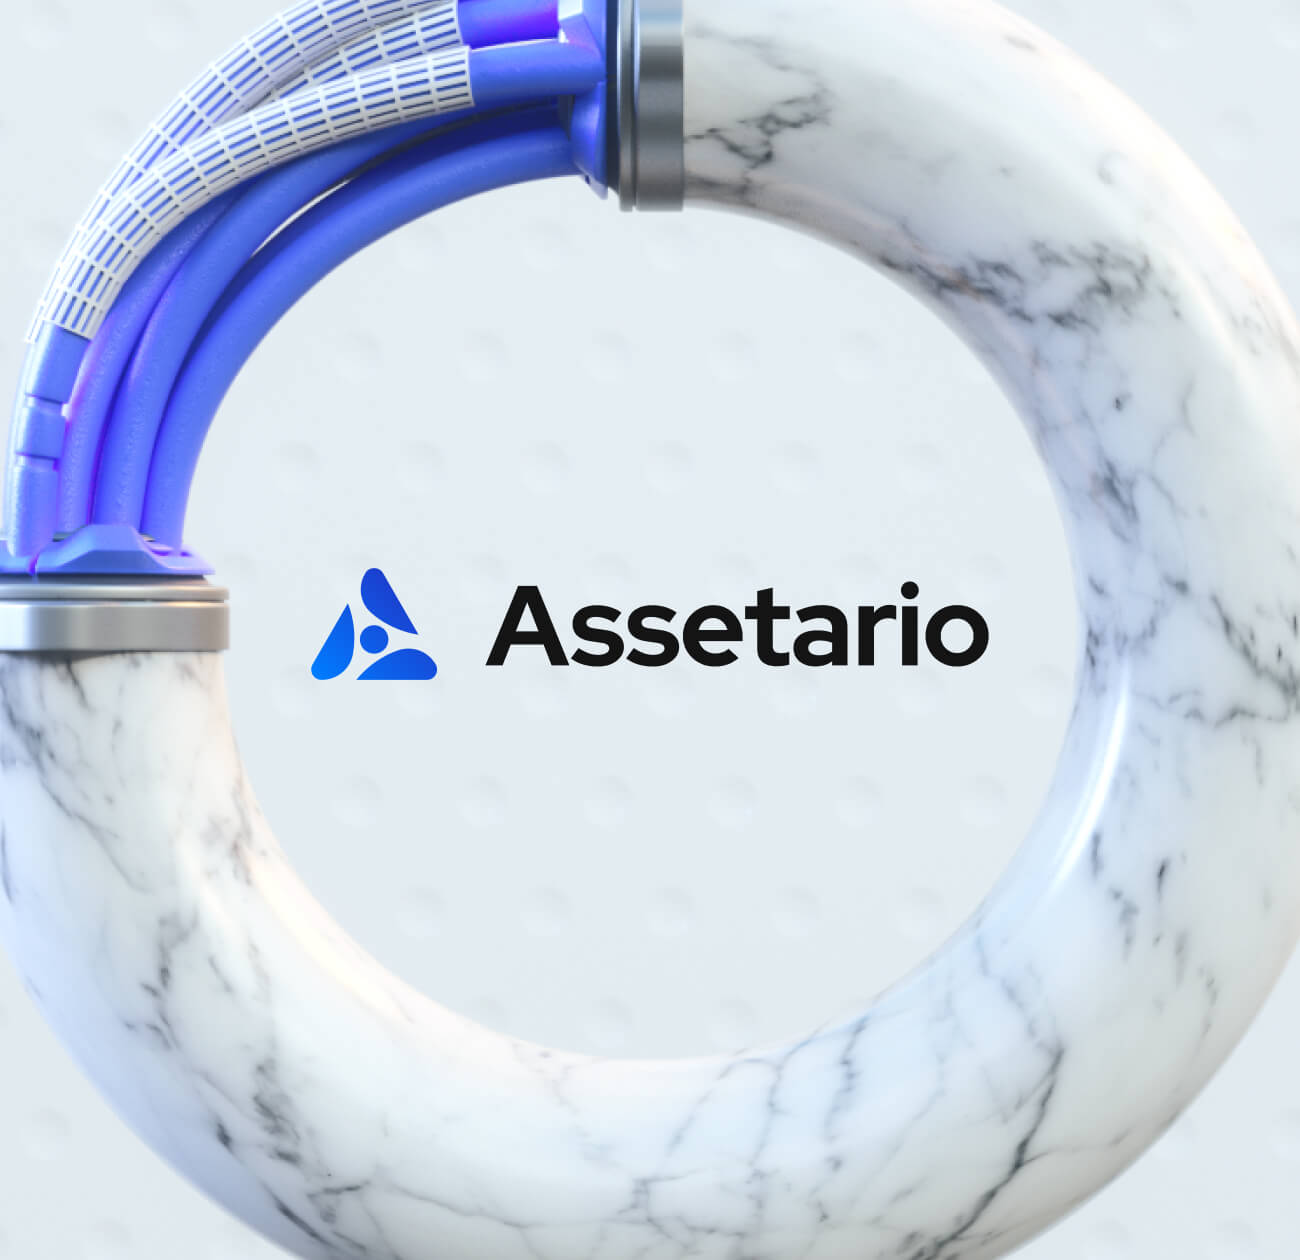 Assetario – Branding for the SaaS platform - Website Development - Photo 3